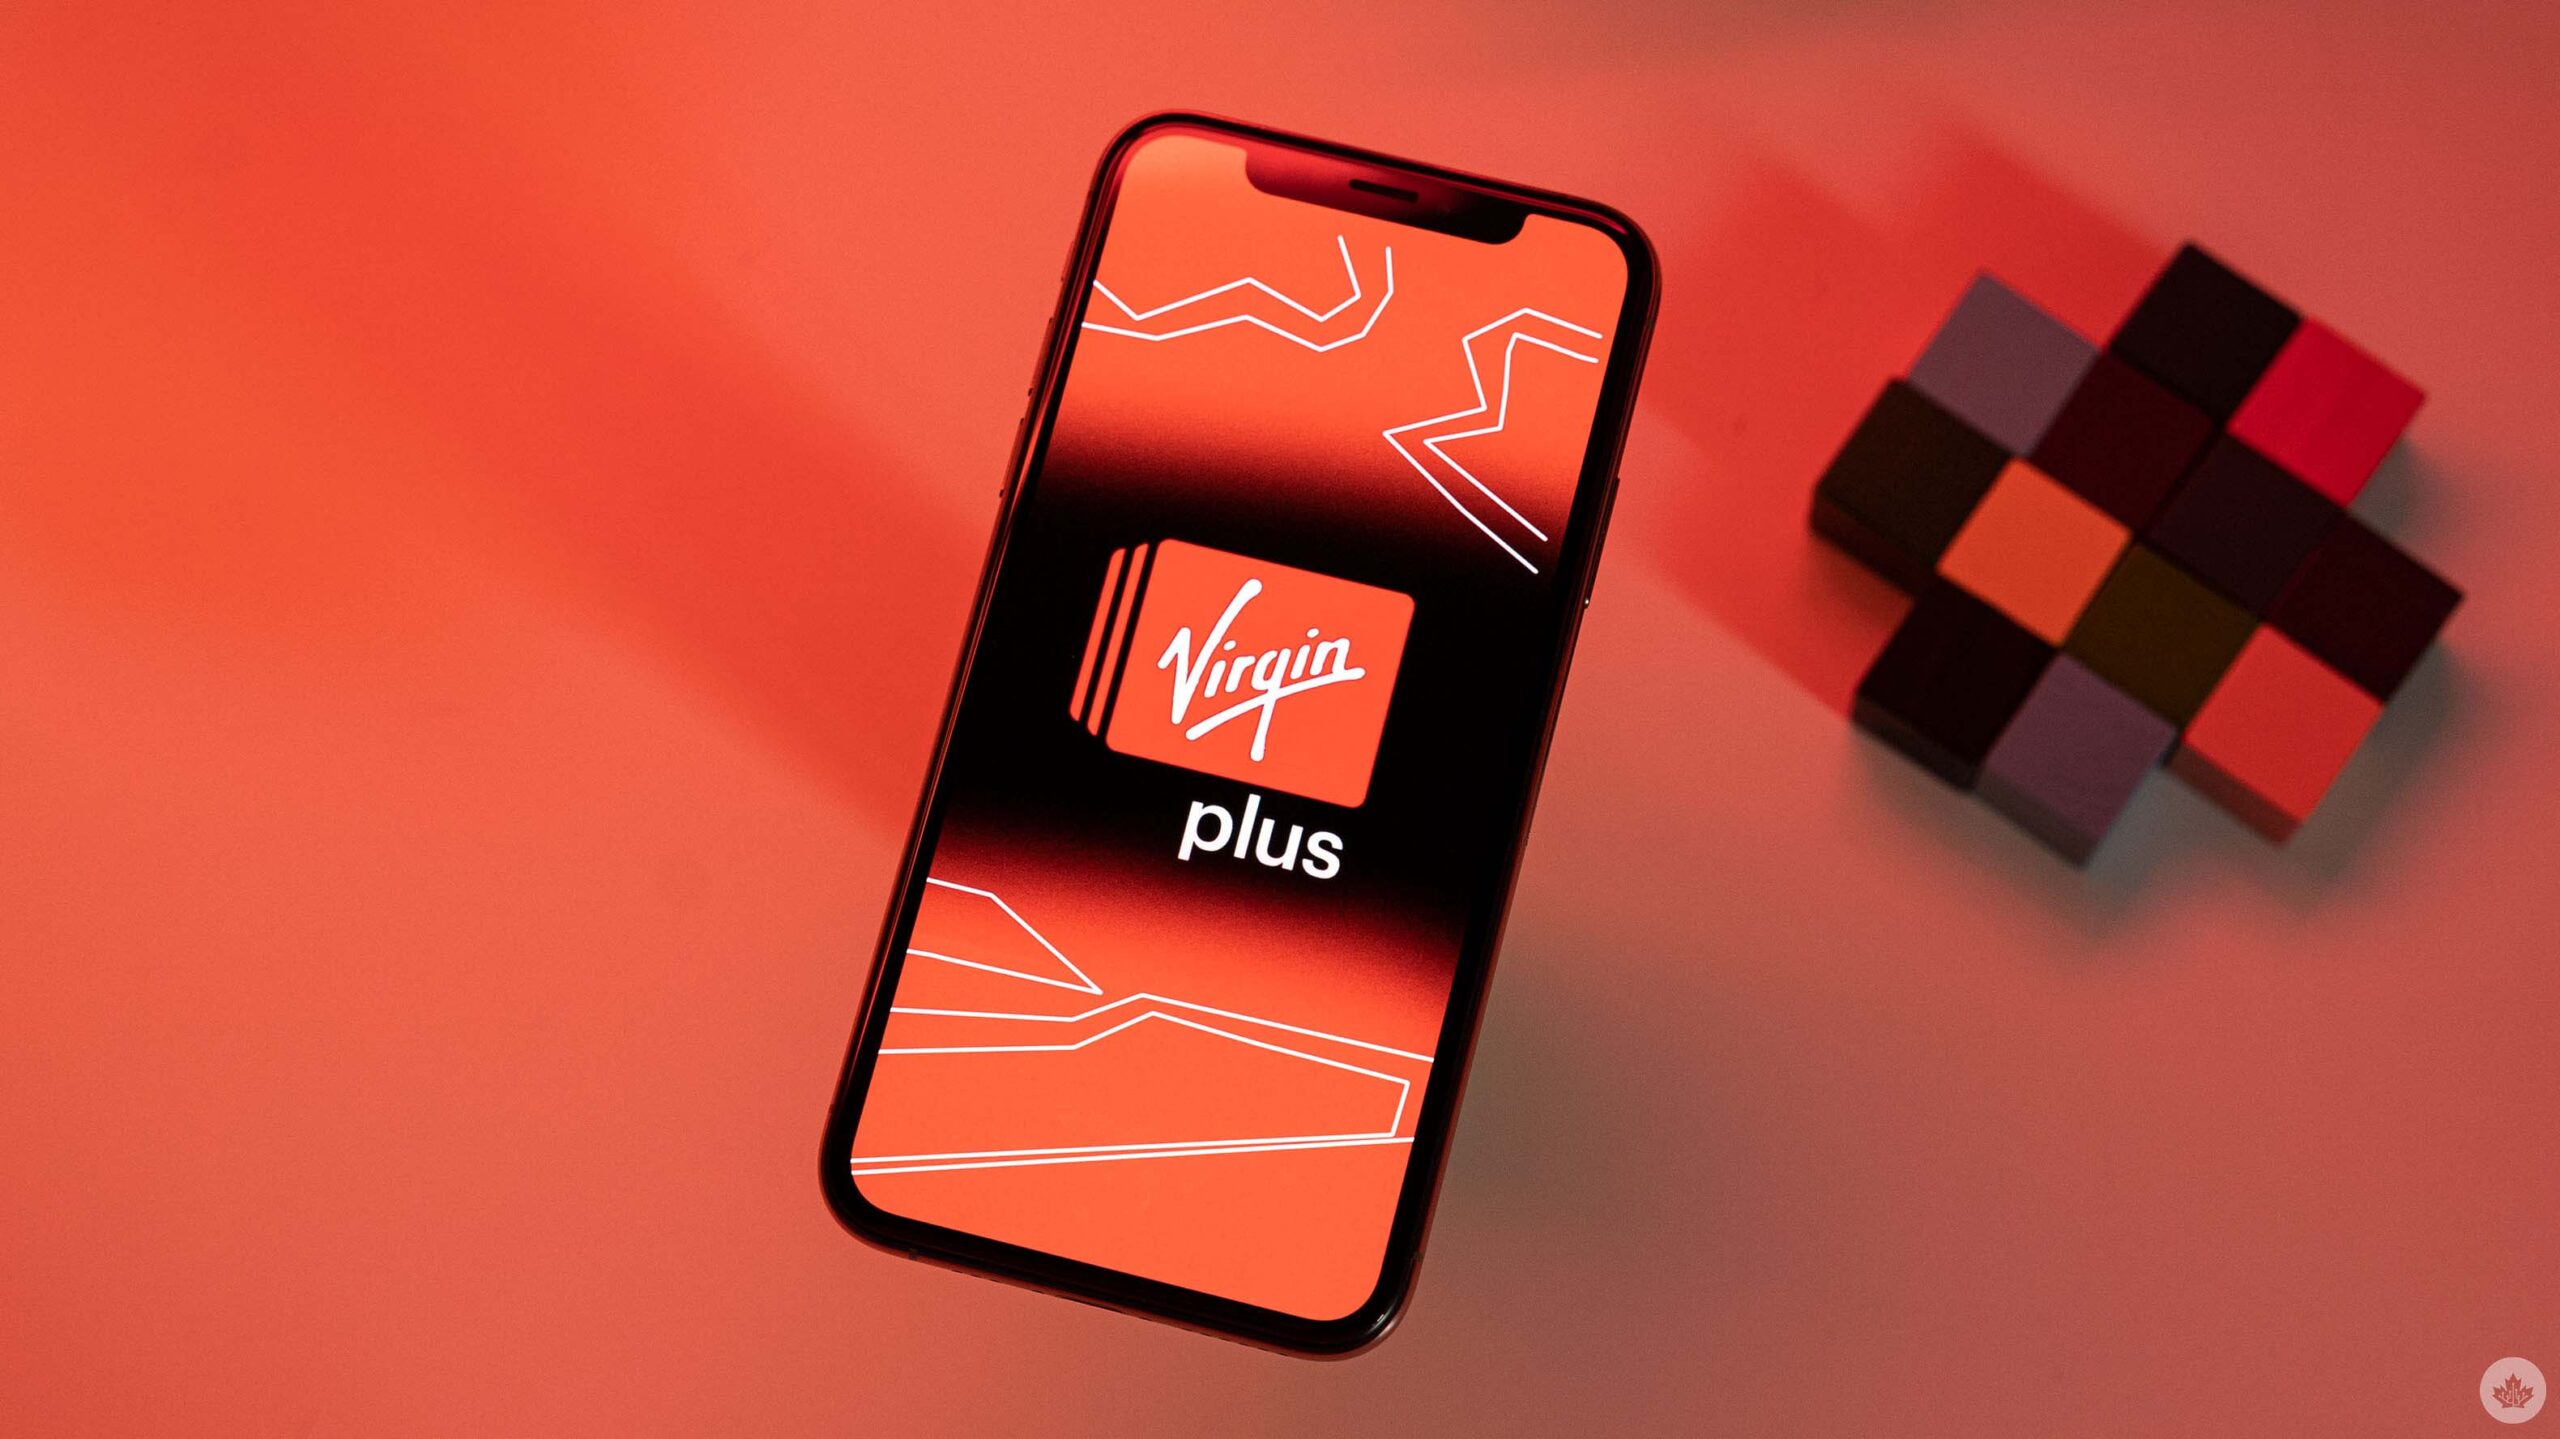 Virgin Plus offers existing customers $61/125GB 5G plan 26